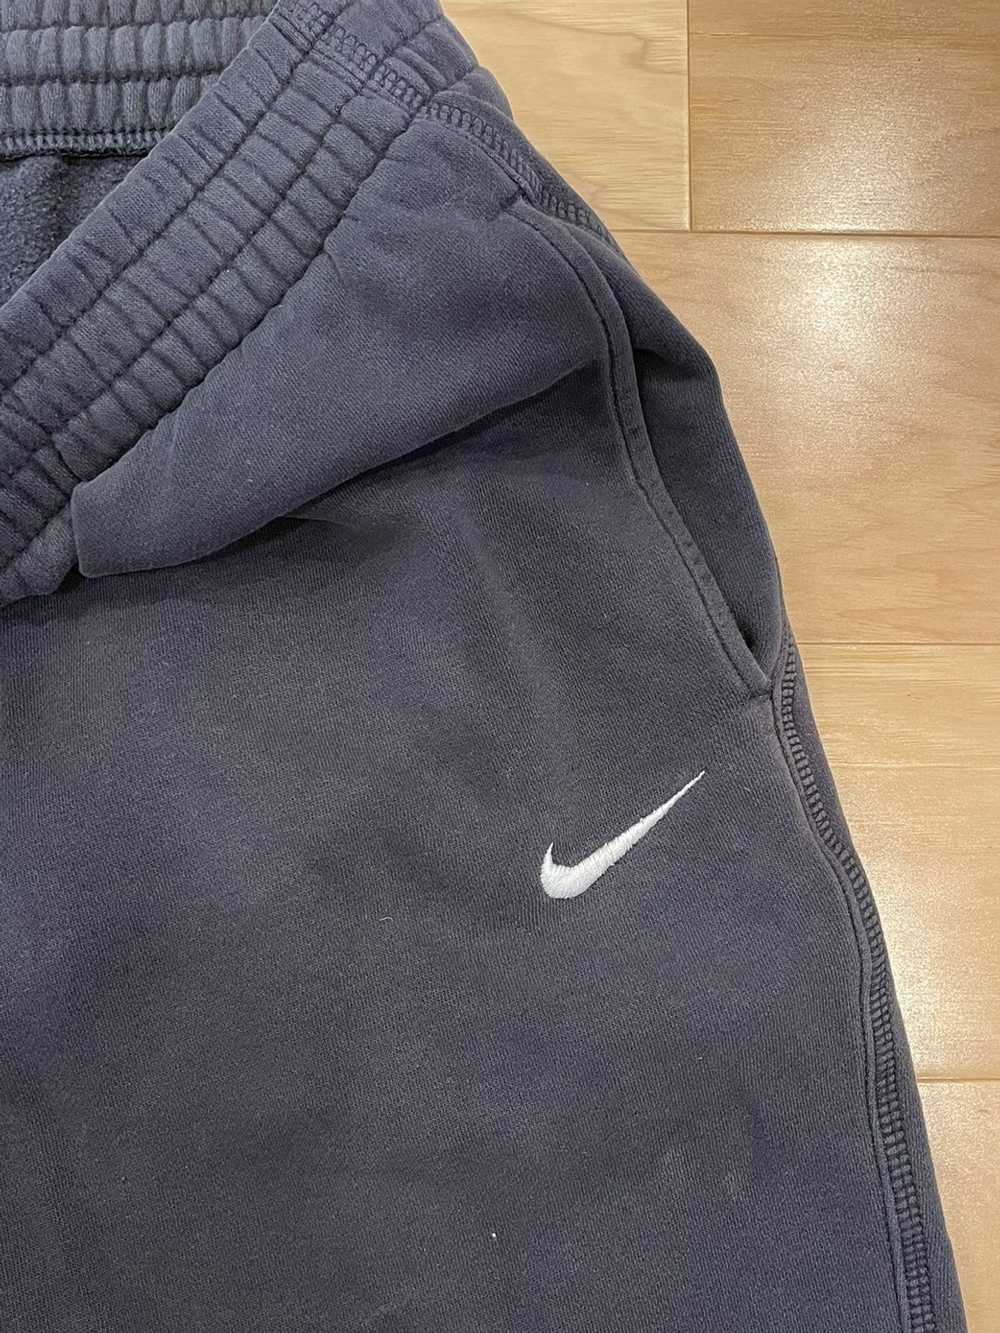 Nike Nike sweatpants - image 3